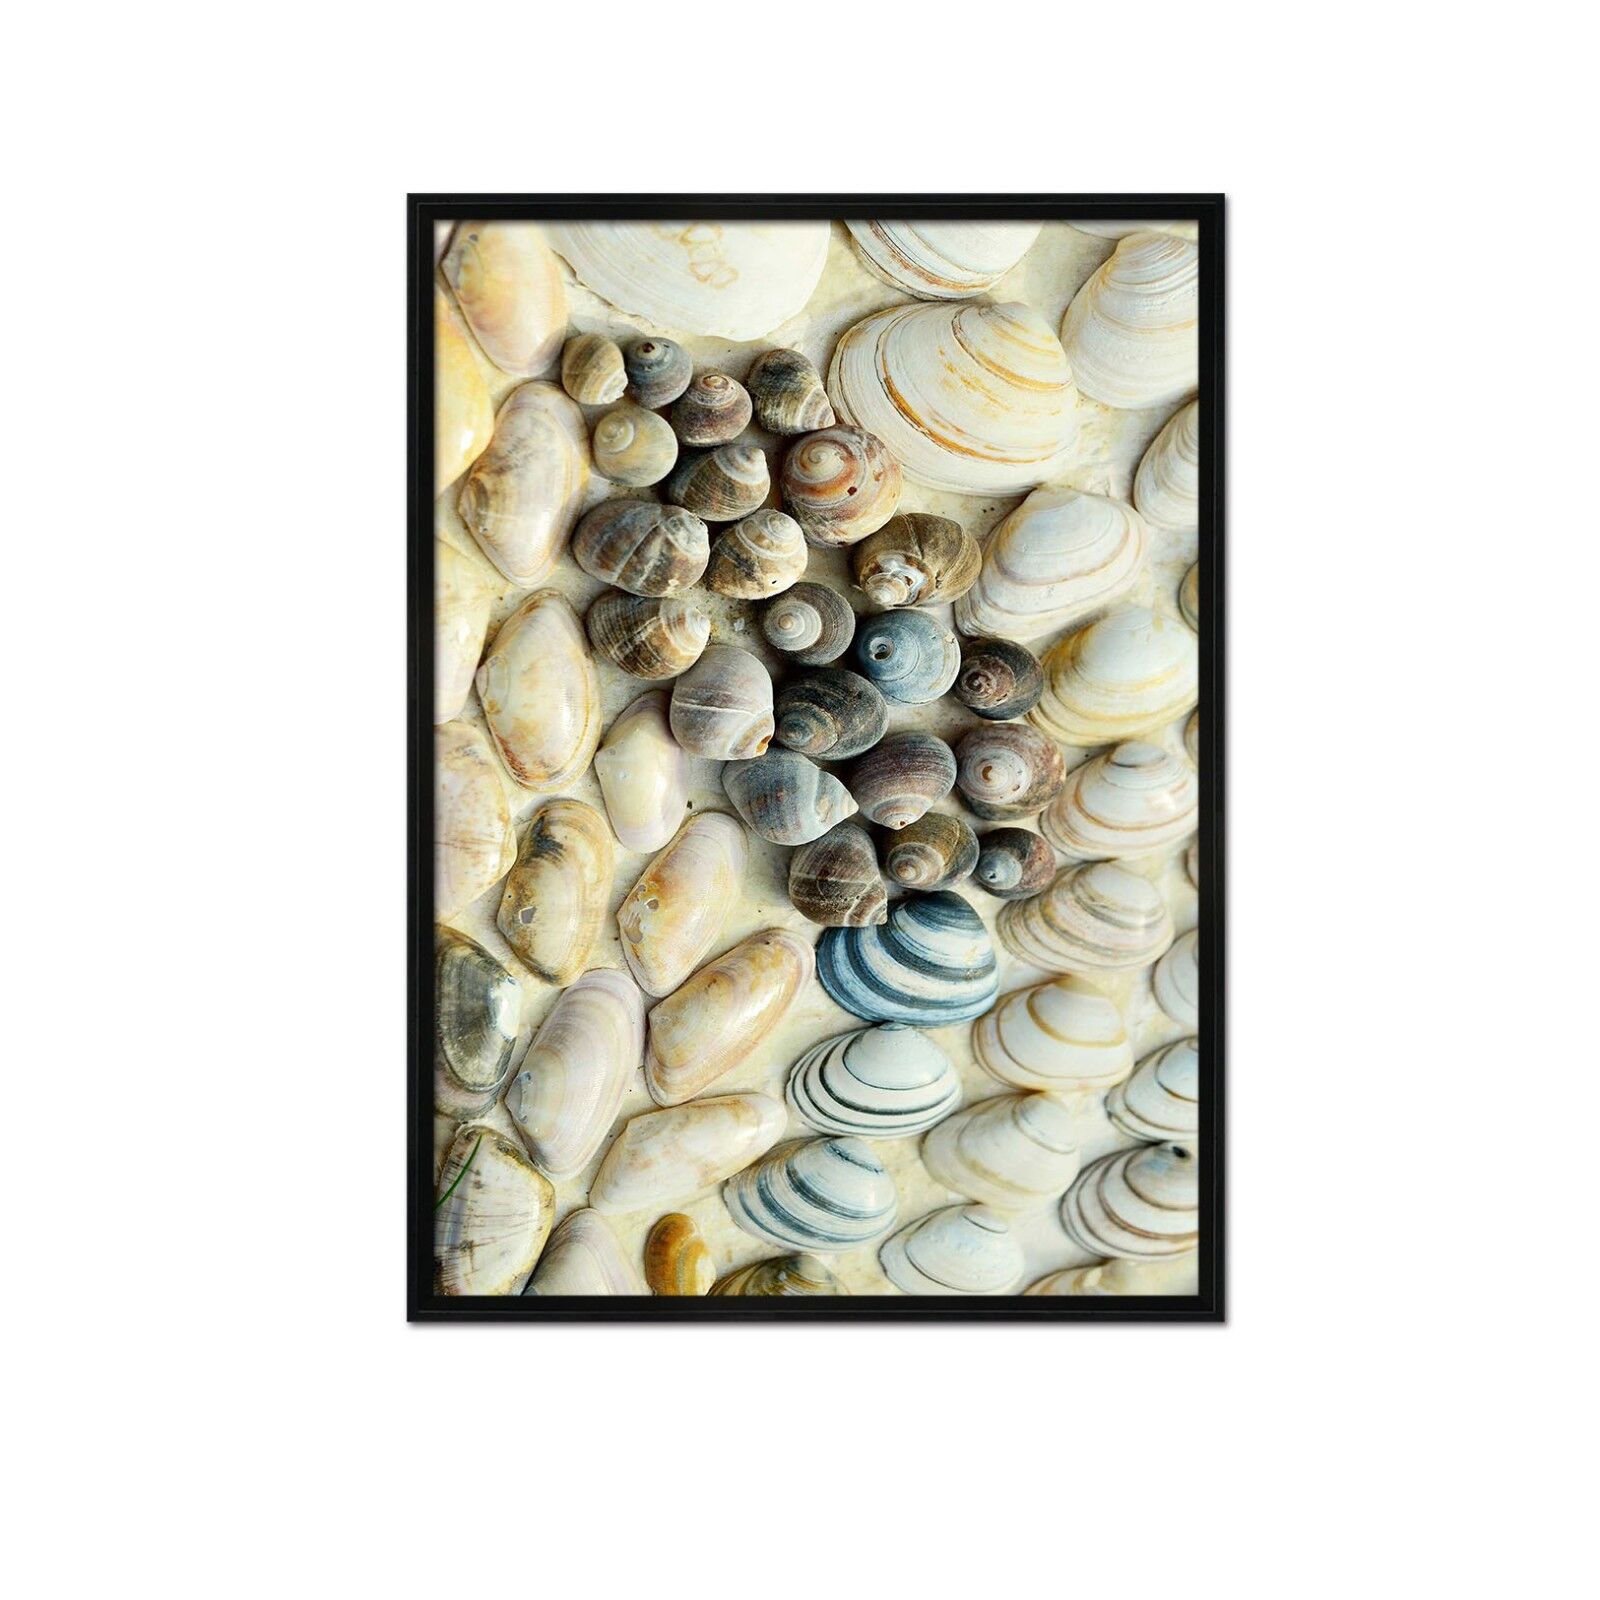 3D Ocean Shell Pattern 3 Framed Poster Home Decor Print Painting Art AJ Klasyczna popularność, zysk